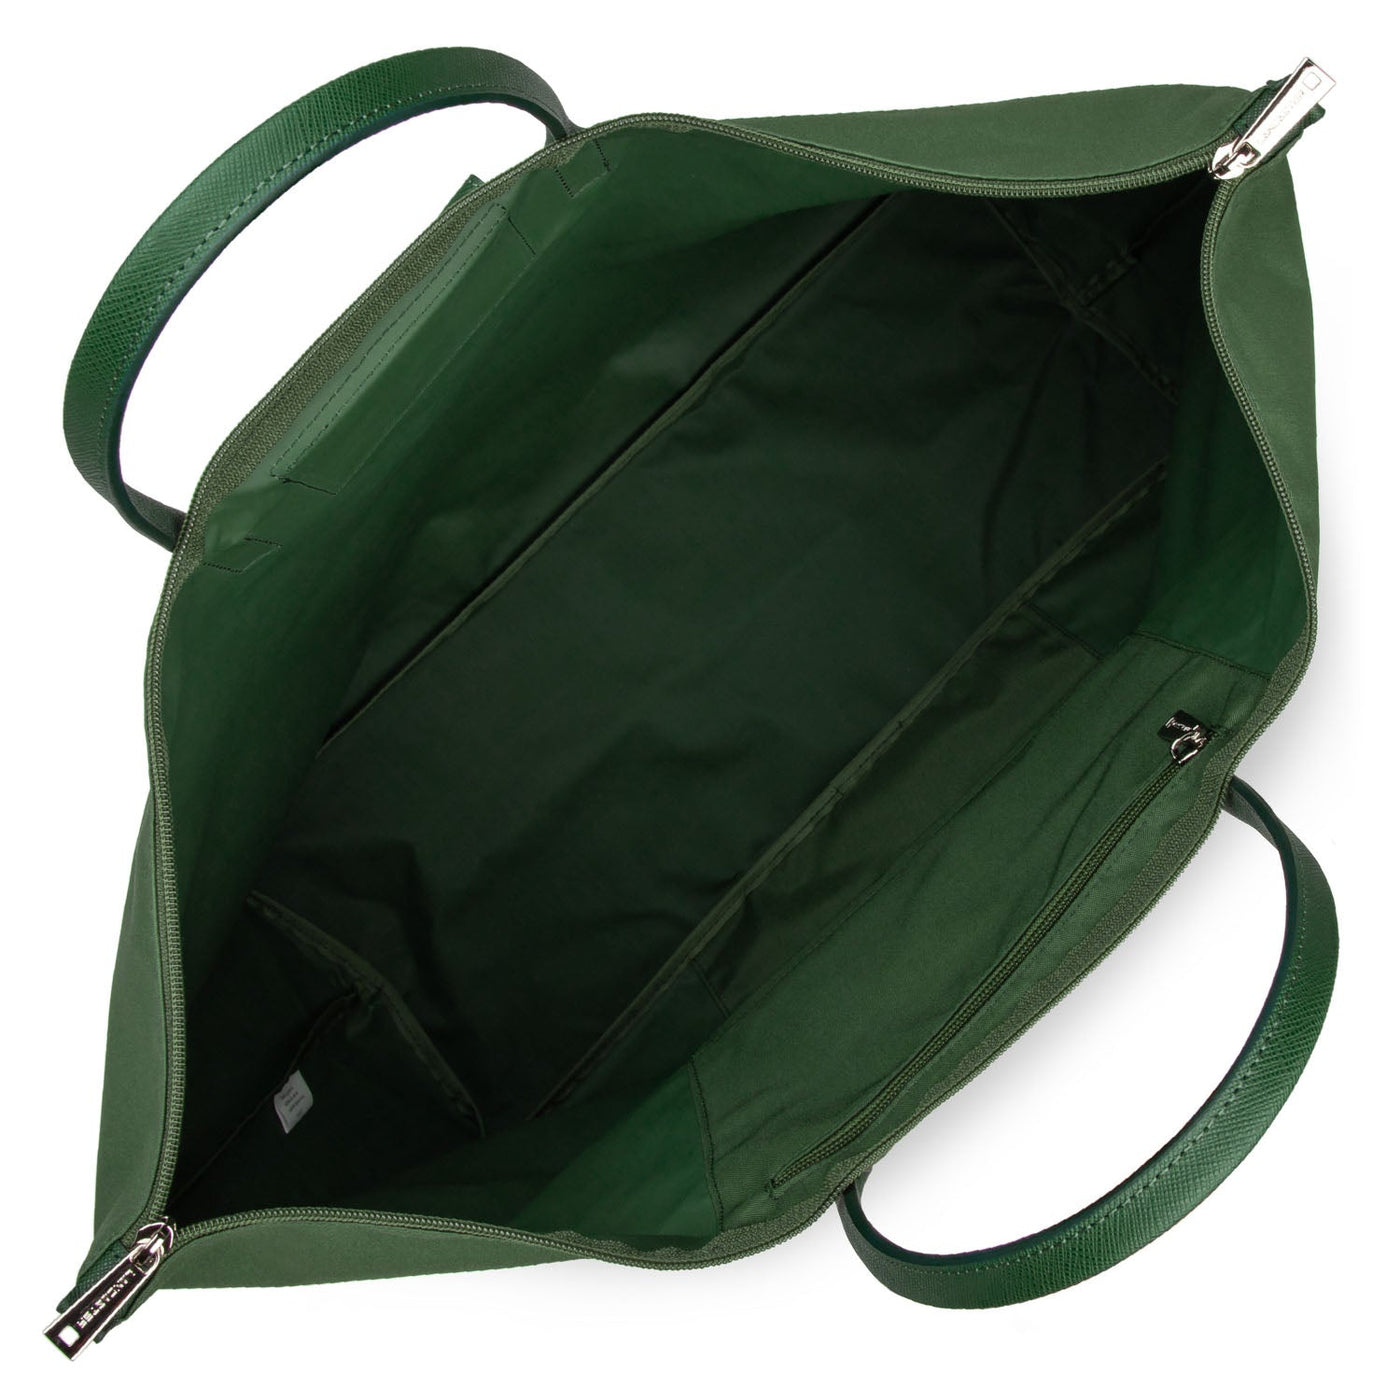 weekender bag - smart kba #couleur_vert-pin